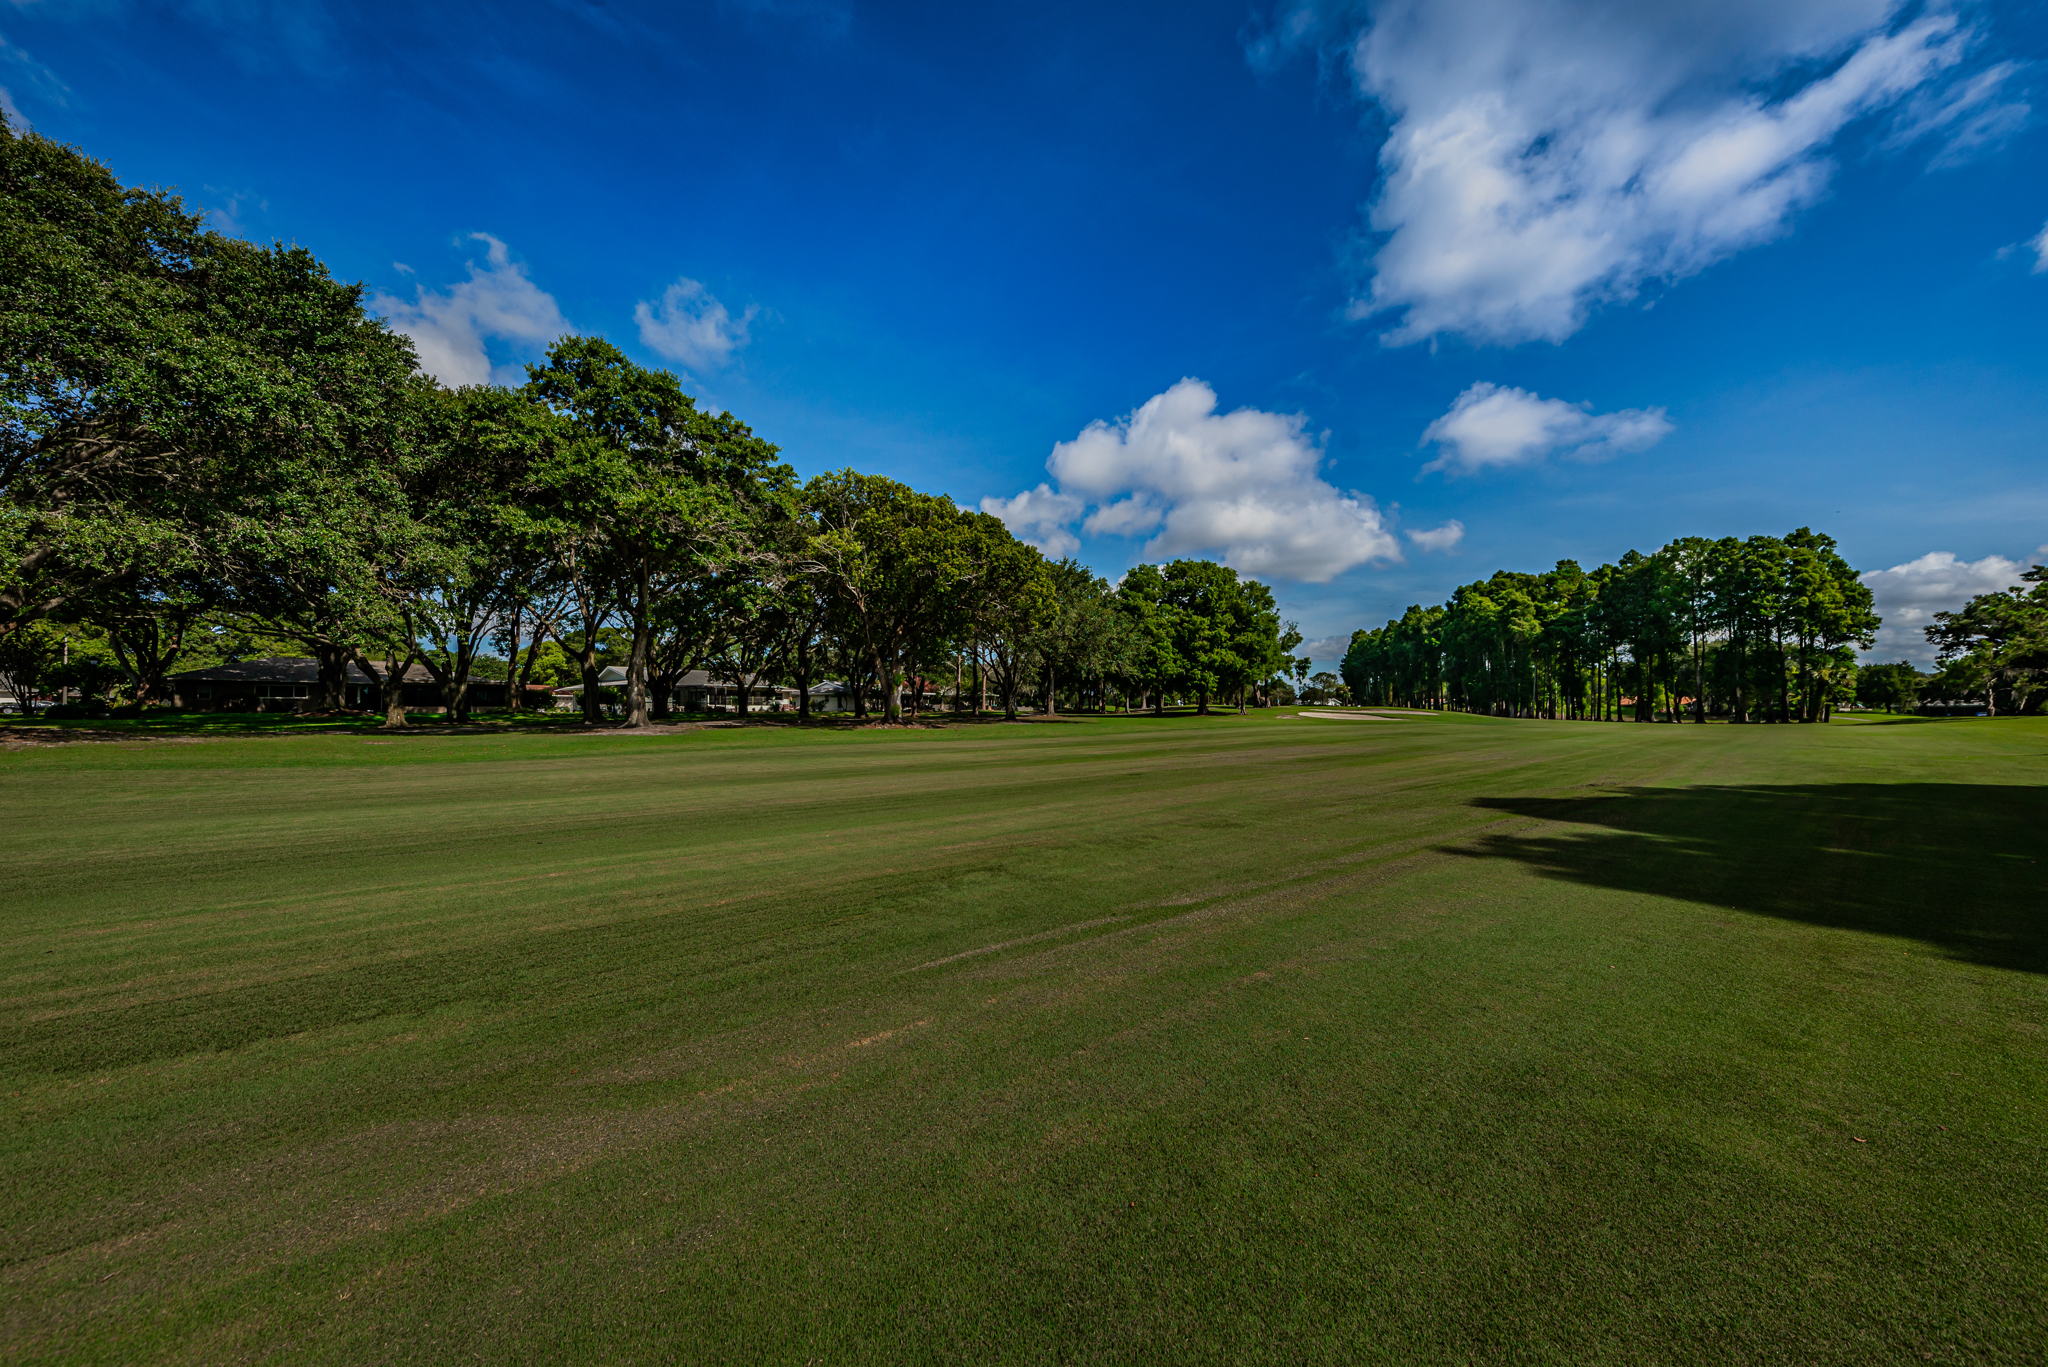 Golf Course and Rear Exterior